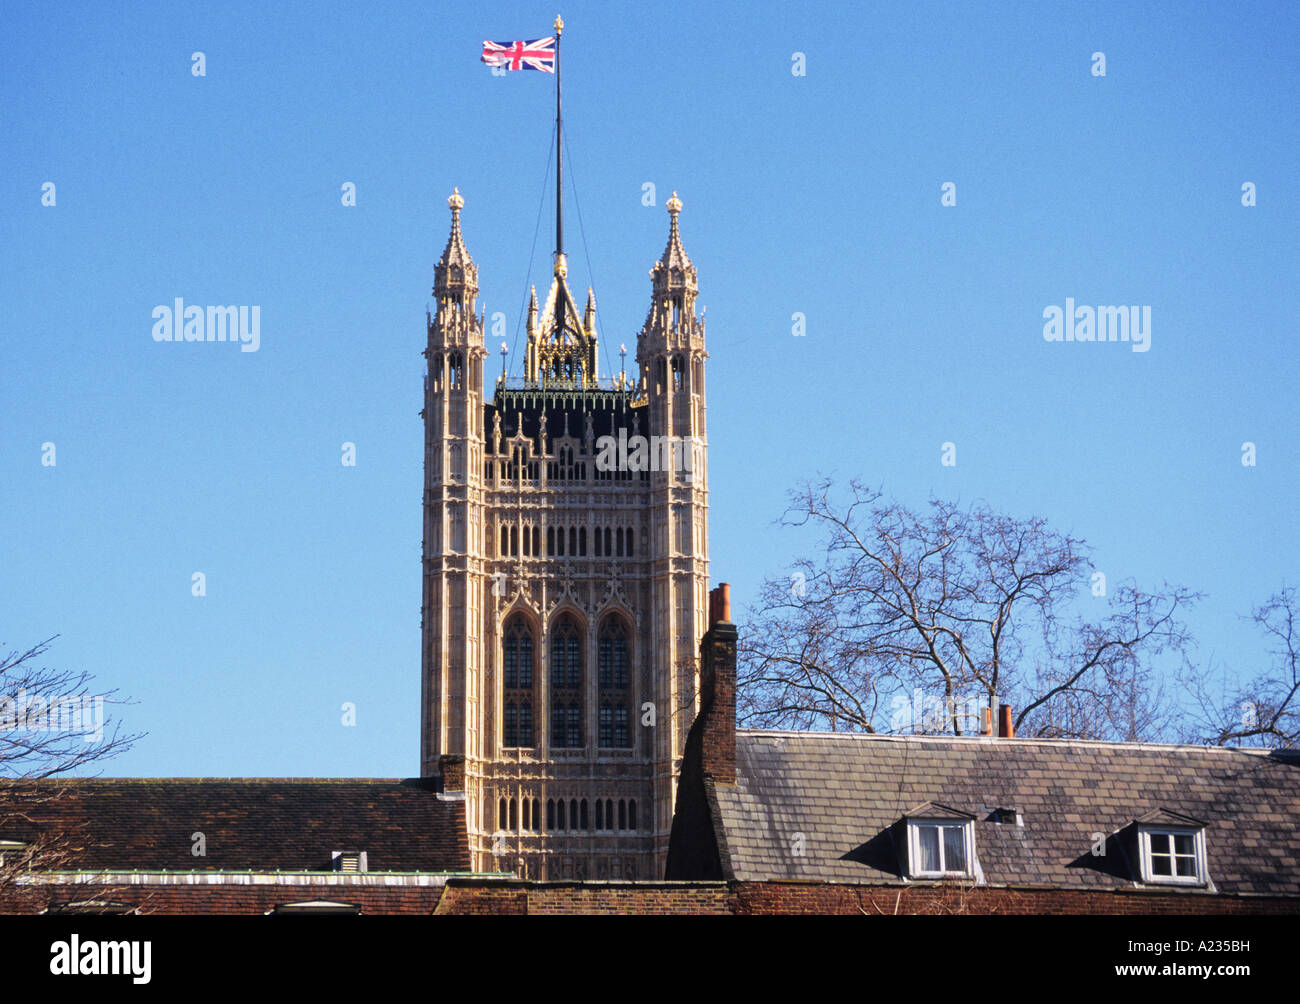 United Kingdom Great Britain London England Victoria's Tower Parliament Square Stock Photo